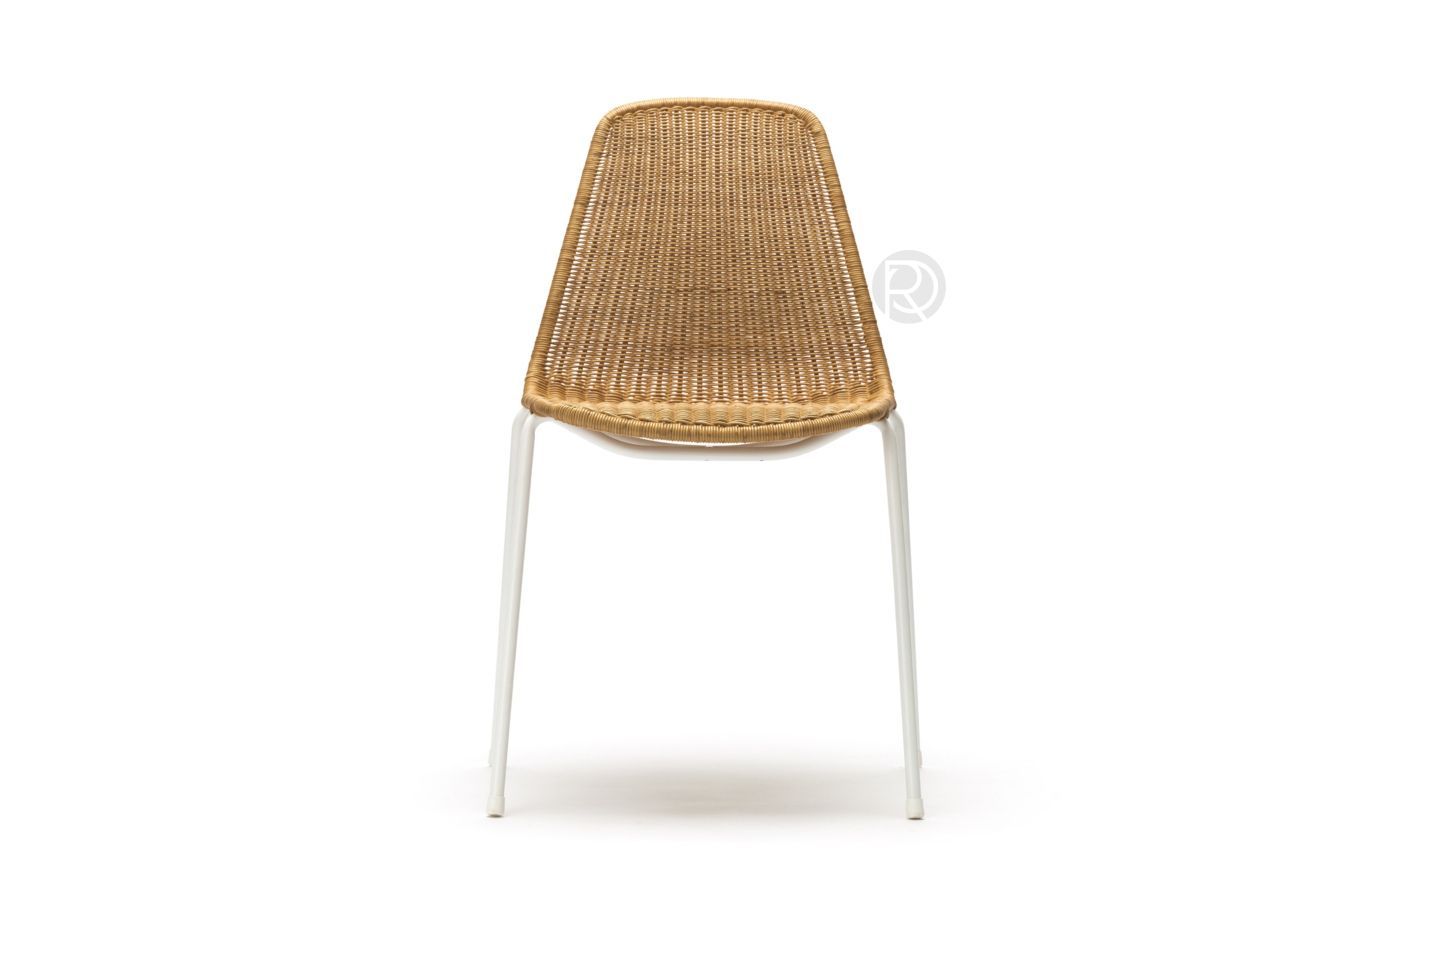 BASKET INDOOR chair by Feelgood Designs